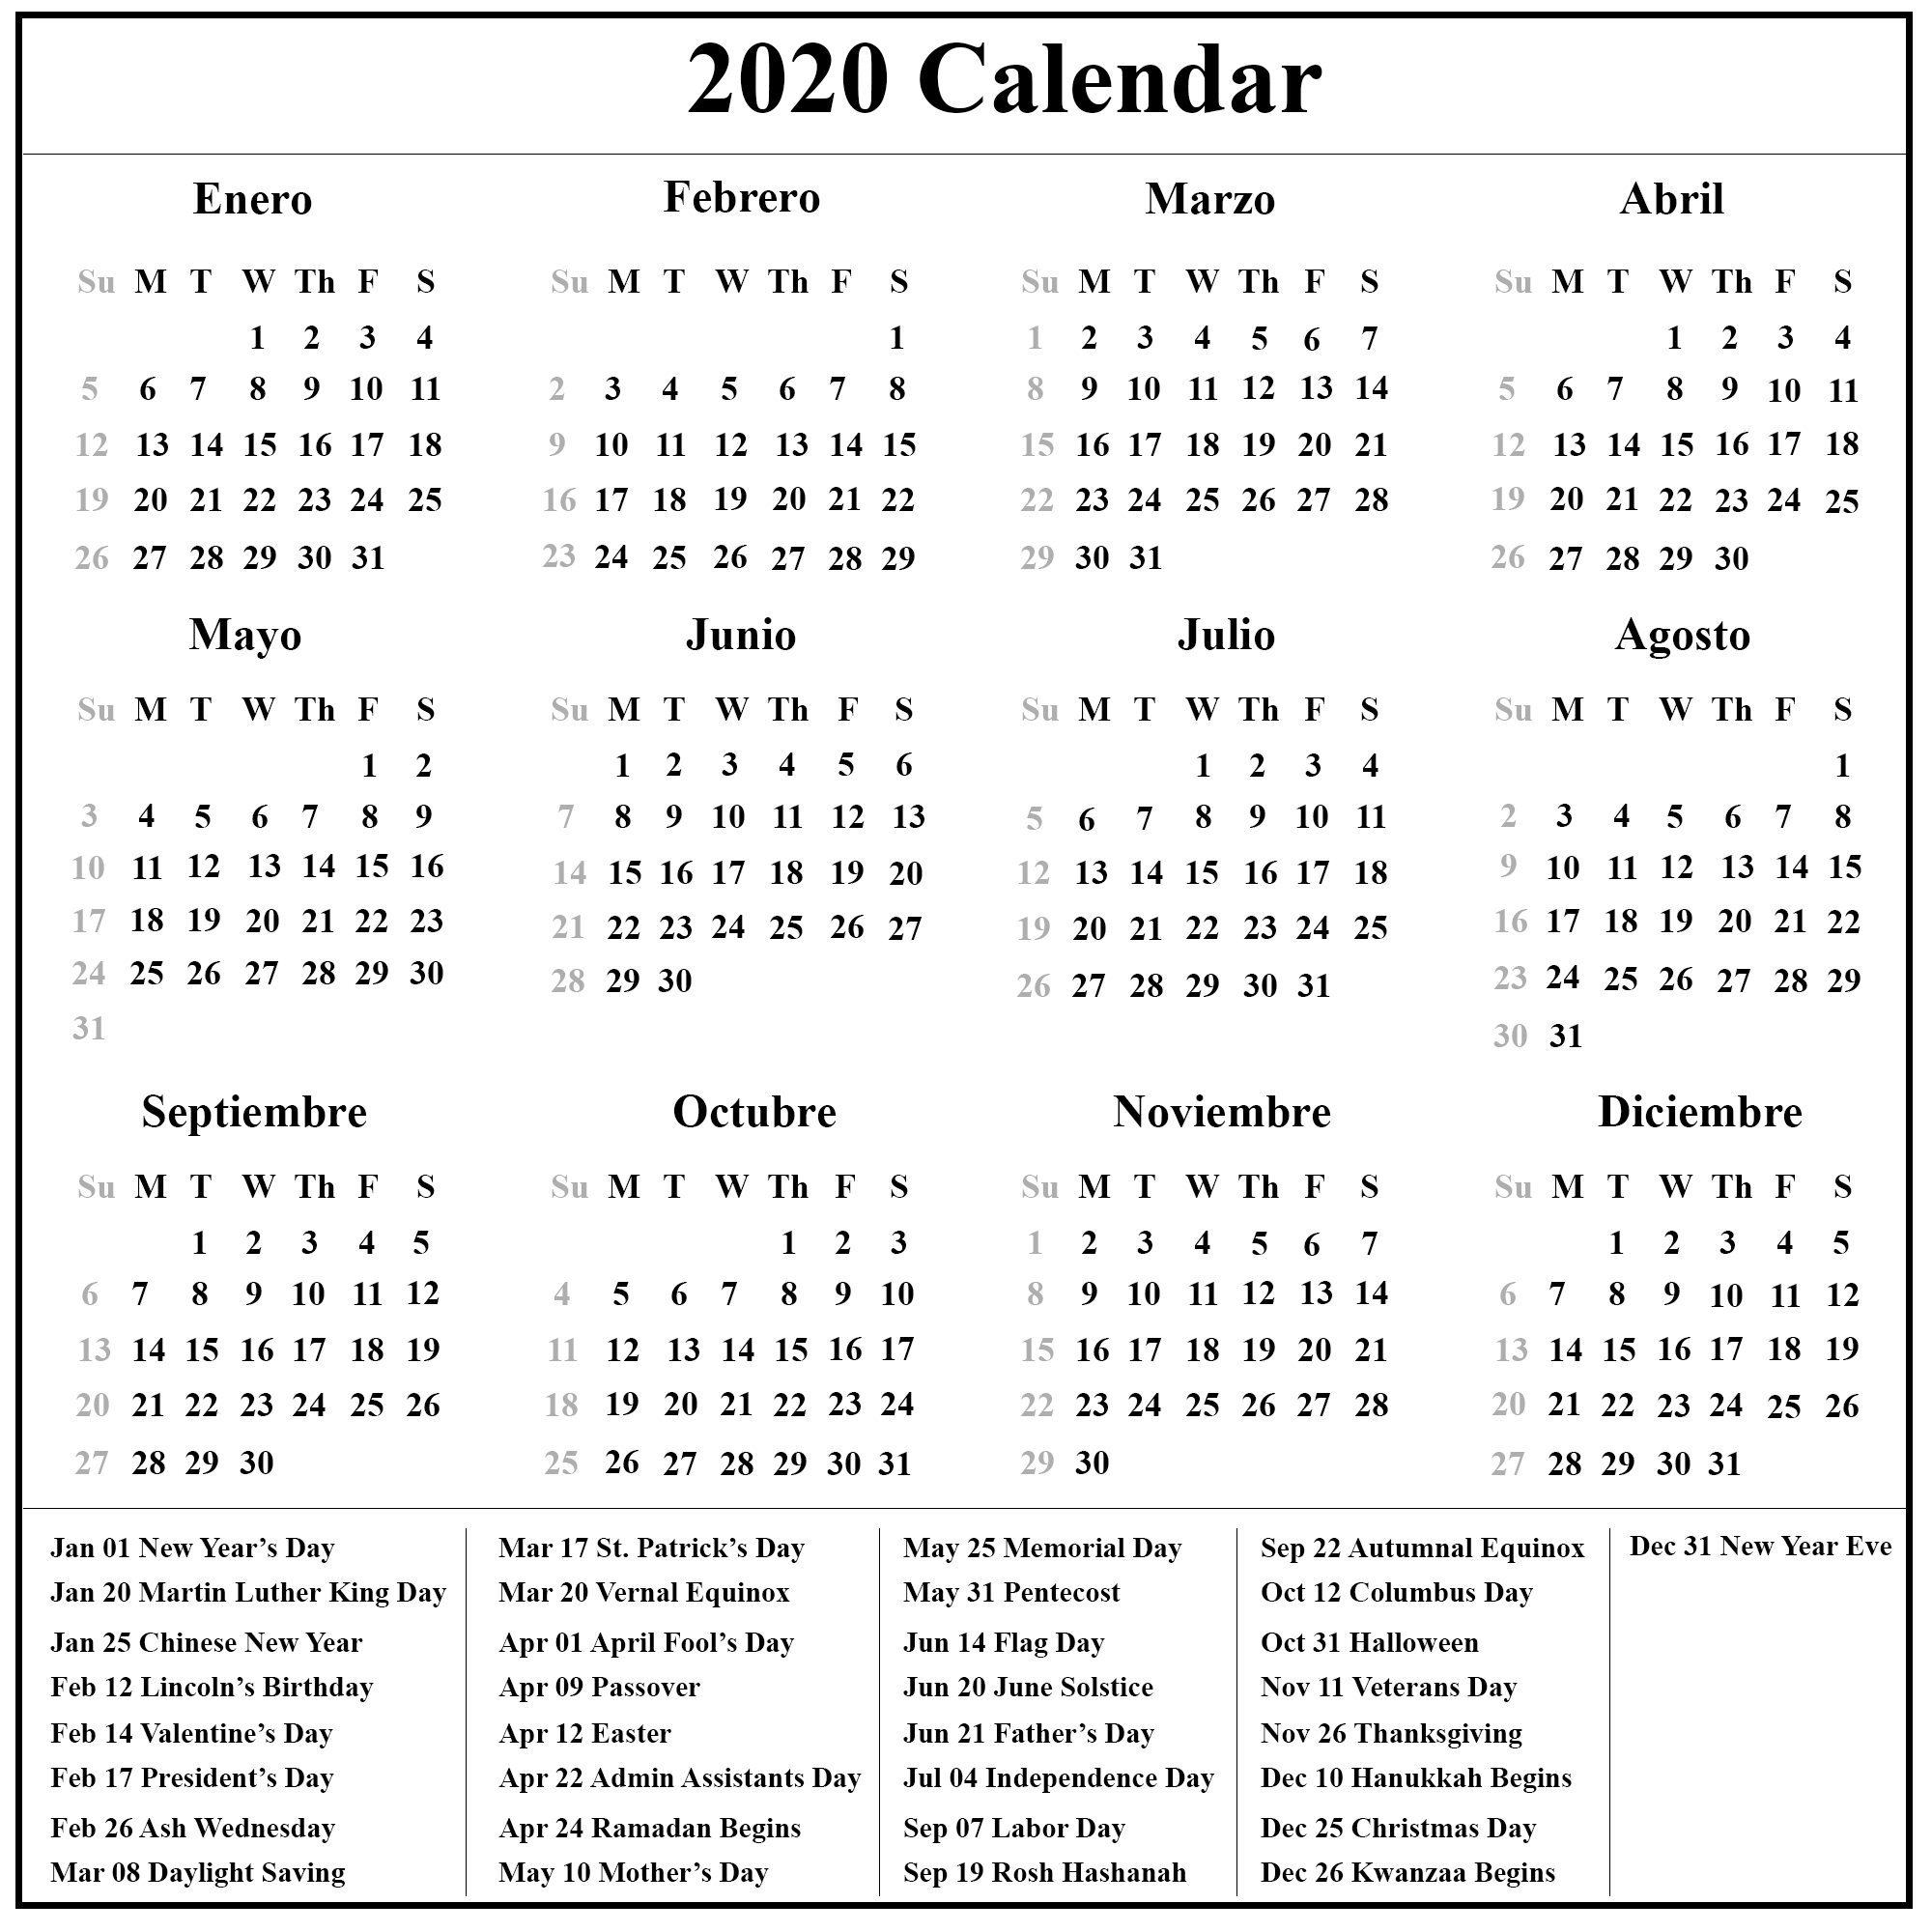 Free Printable Spanish Calendar 2020 | 2020 Calendario-Jewish Holidays 2020 Outlook Calendar